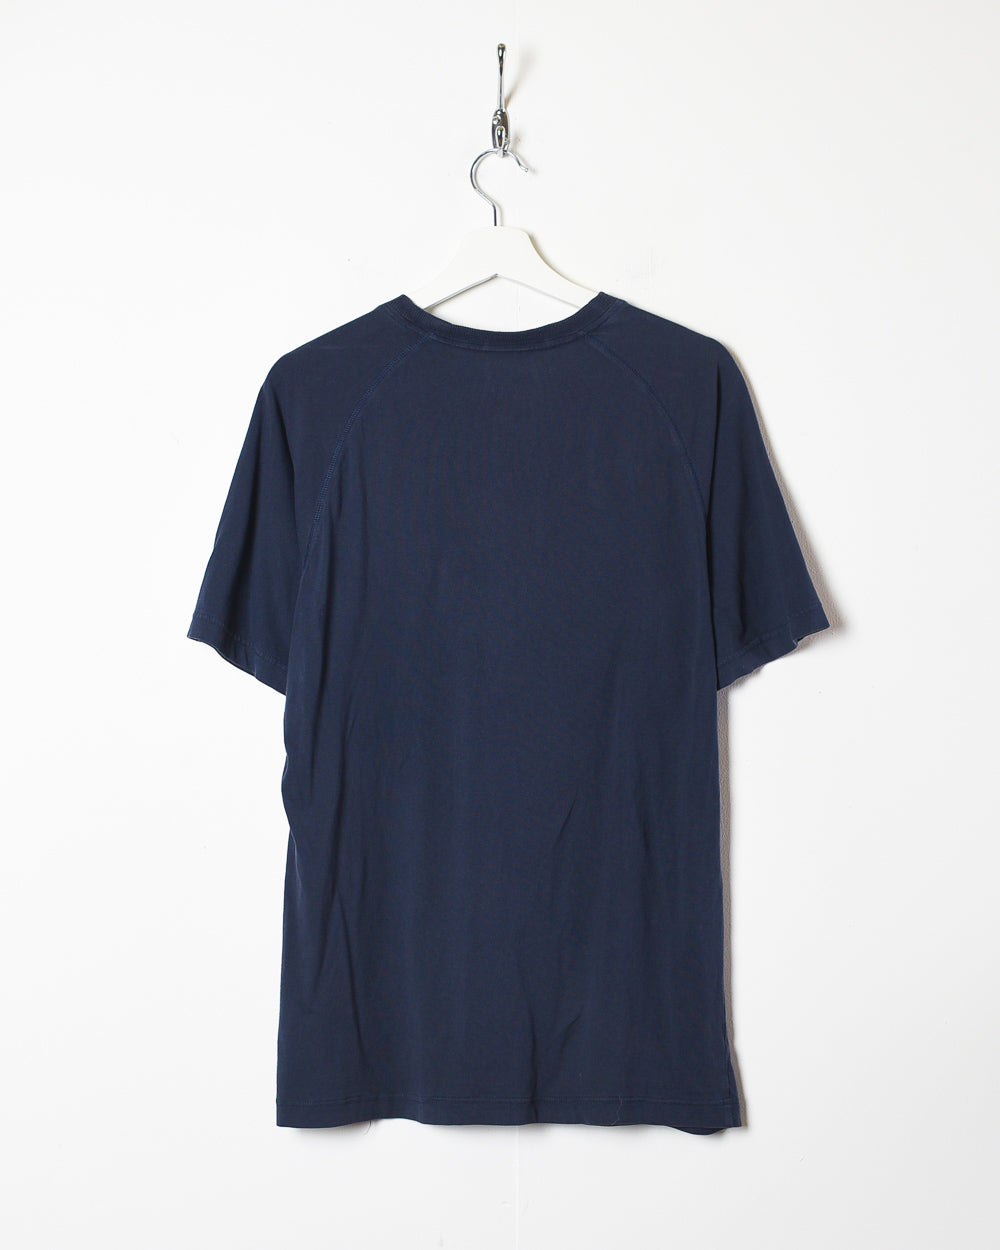 Navy Adidas T-Shirt - Medium